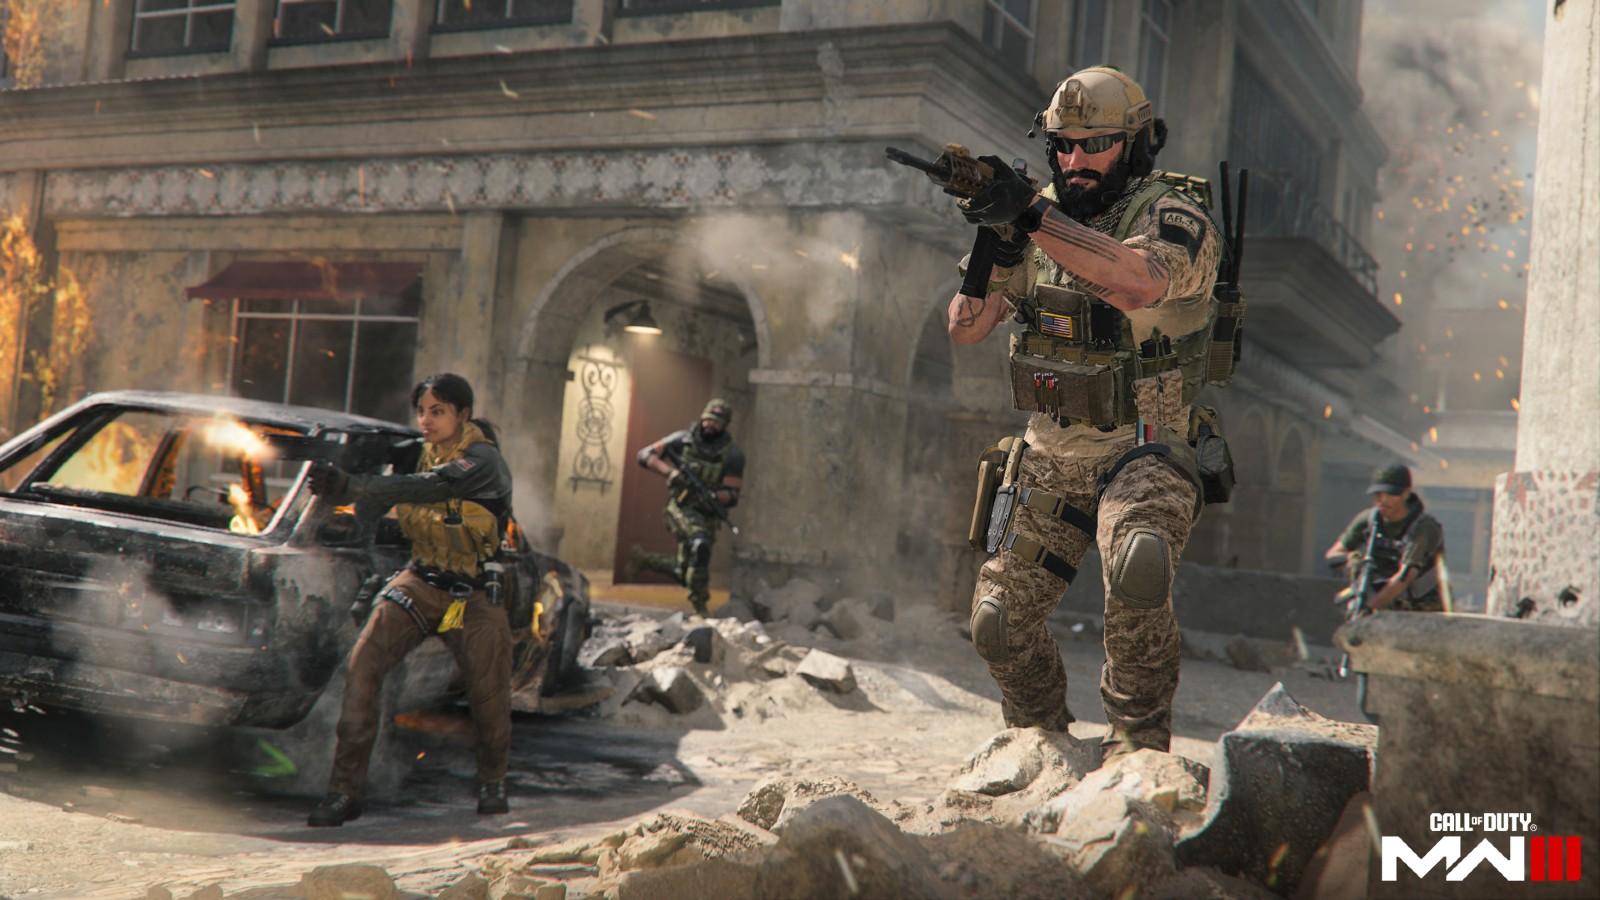 Watch Call of Duty: Modern Warfare III on Twitch and Earn Rewards in Modern  Warfare III